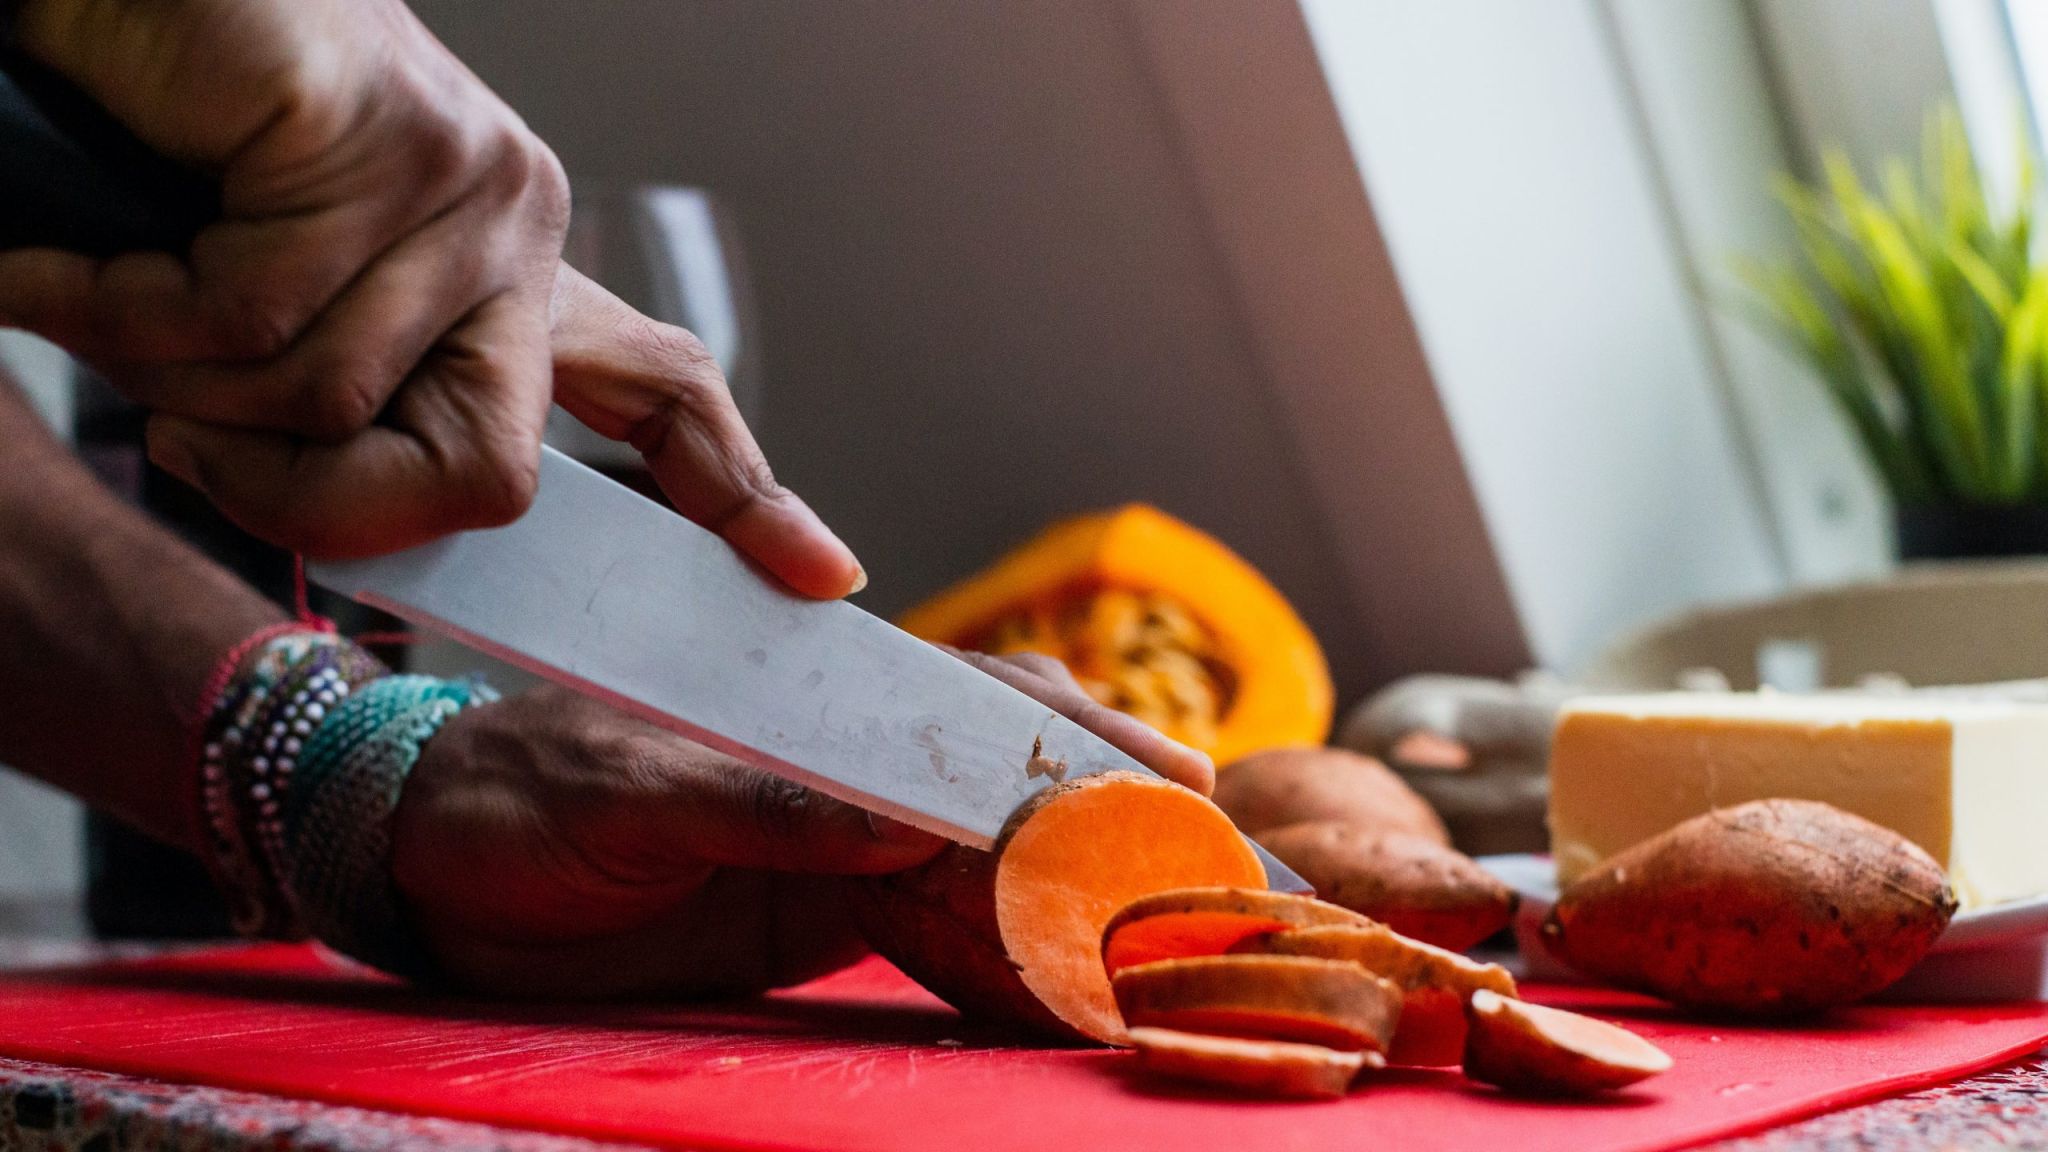 Hand slicing a sweetpotato